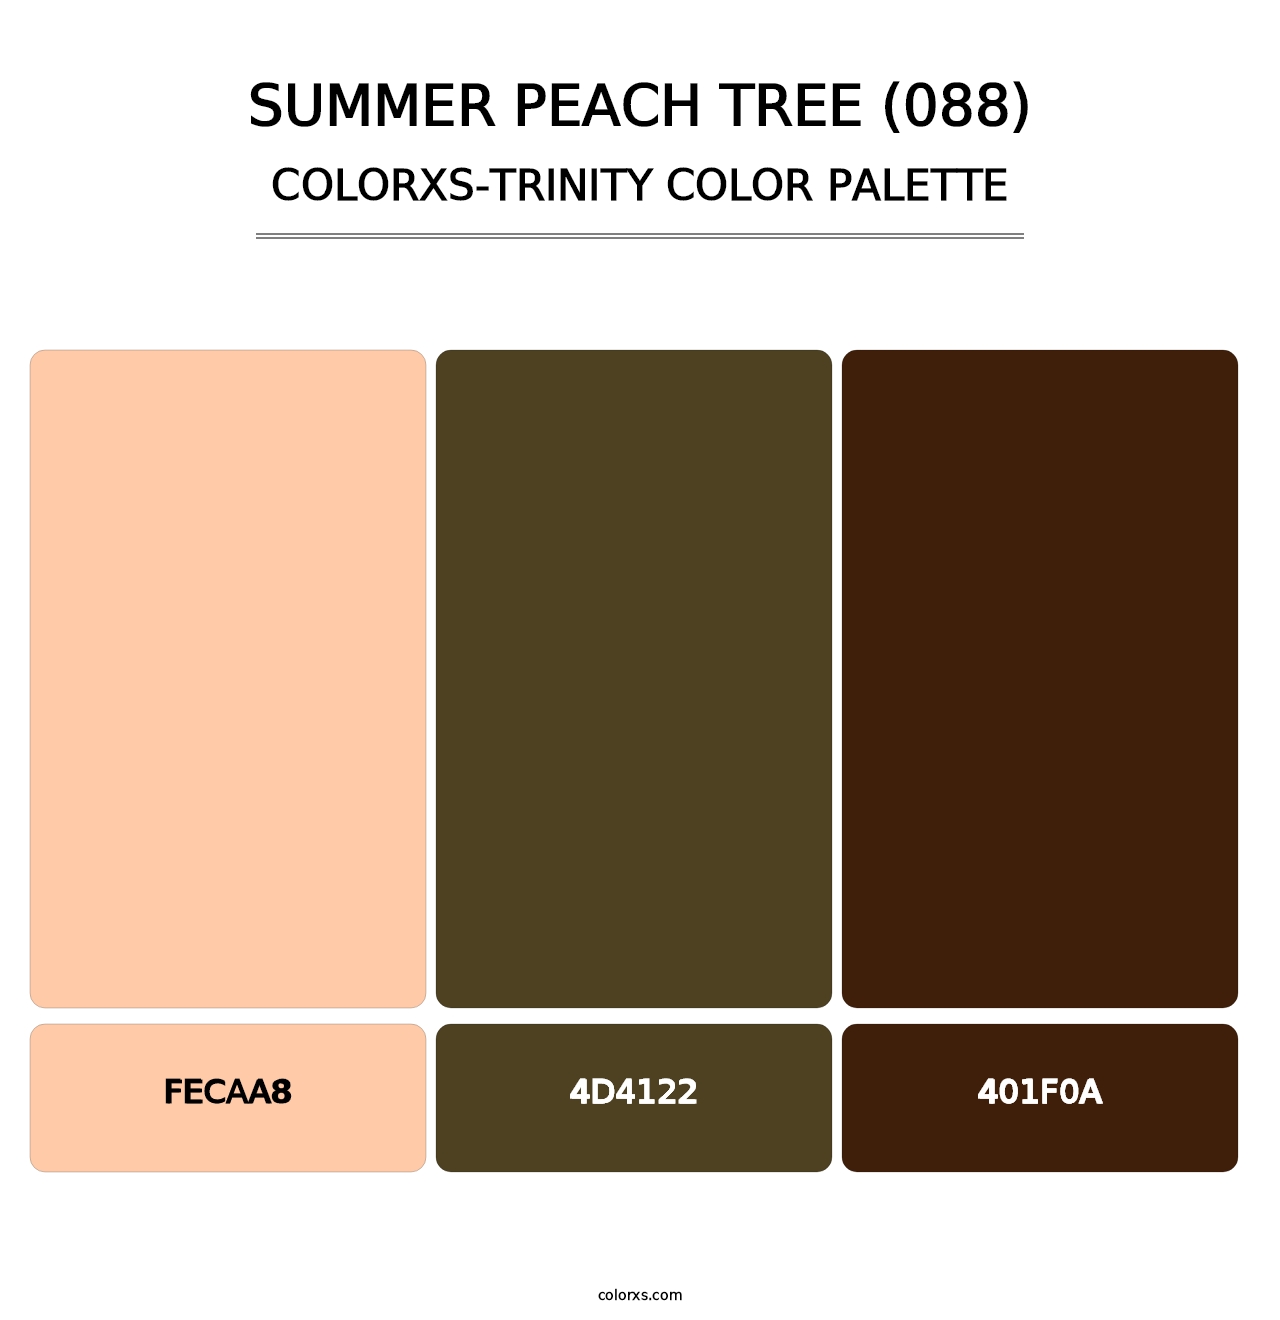 Summer Peach Tree (088) - Colorxs Trinity Palette